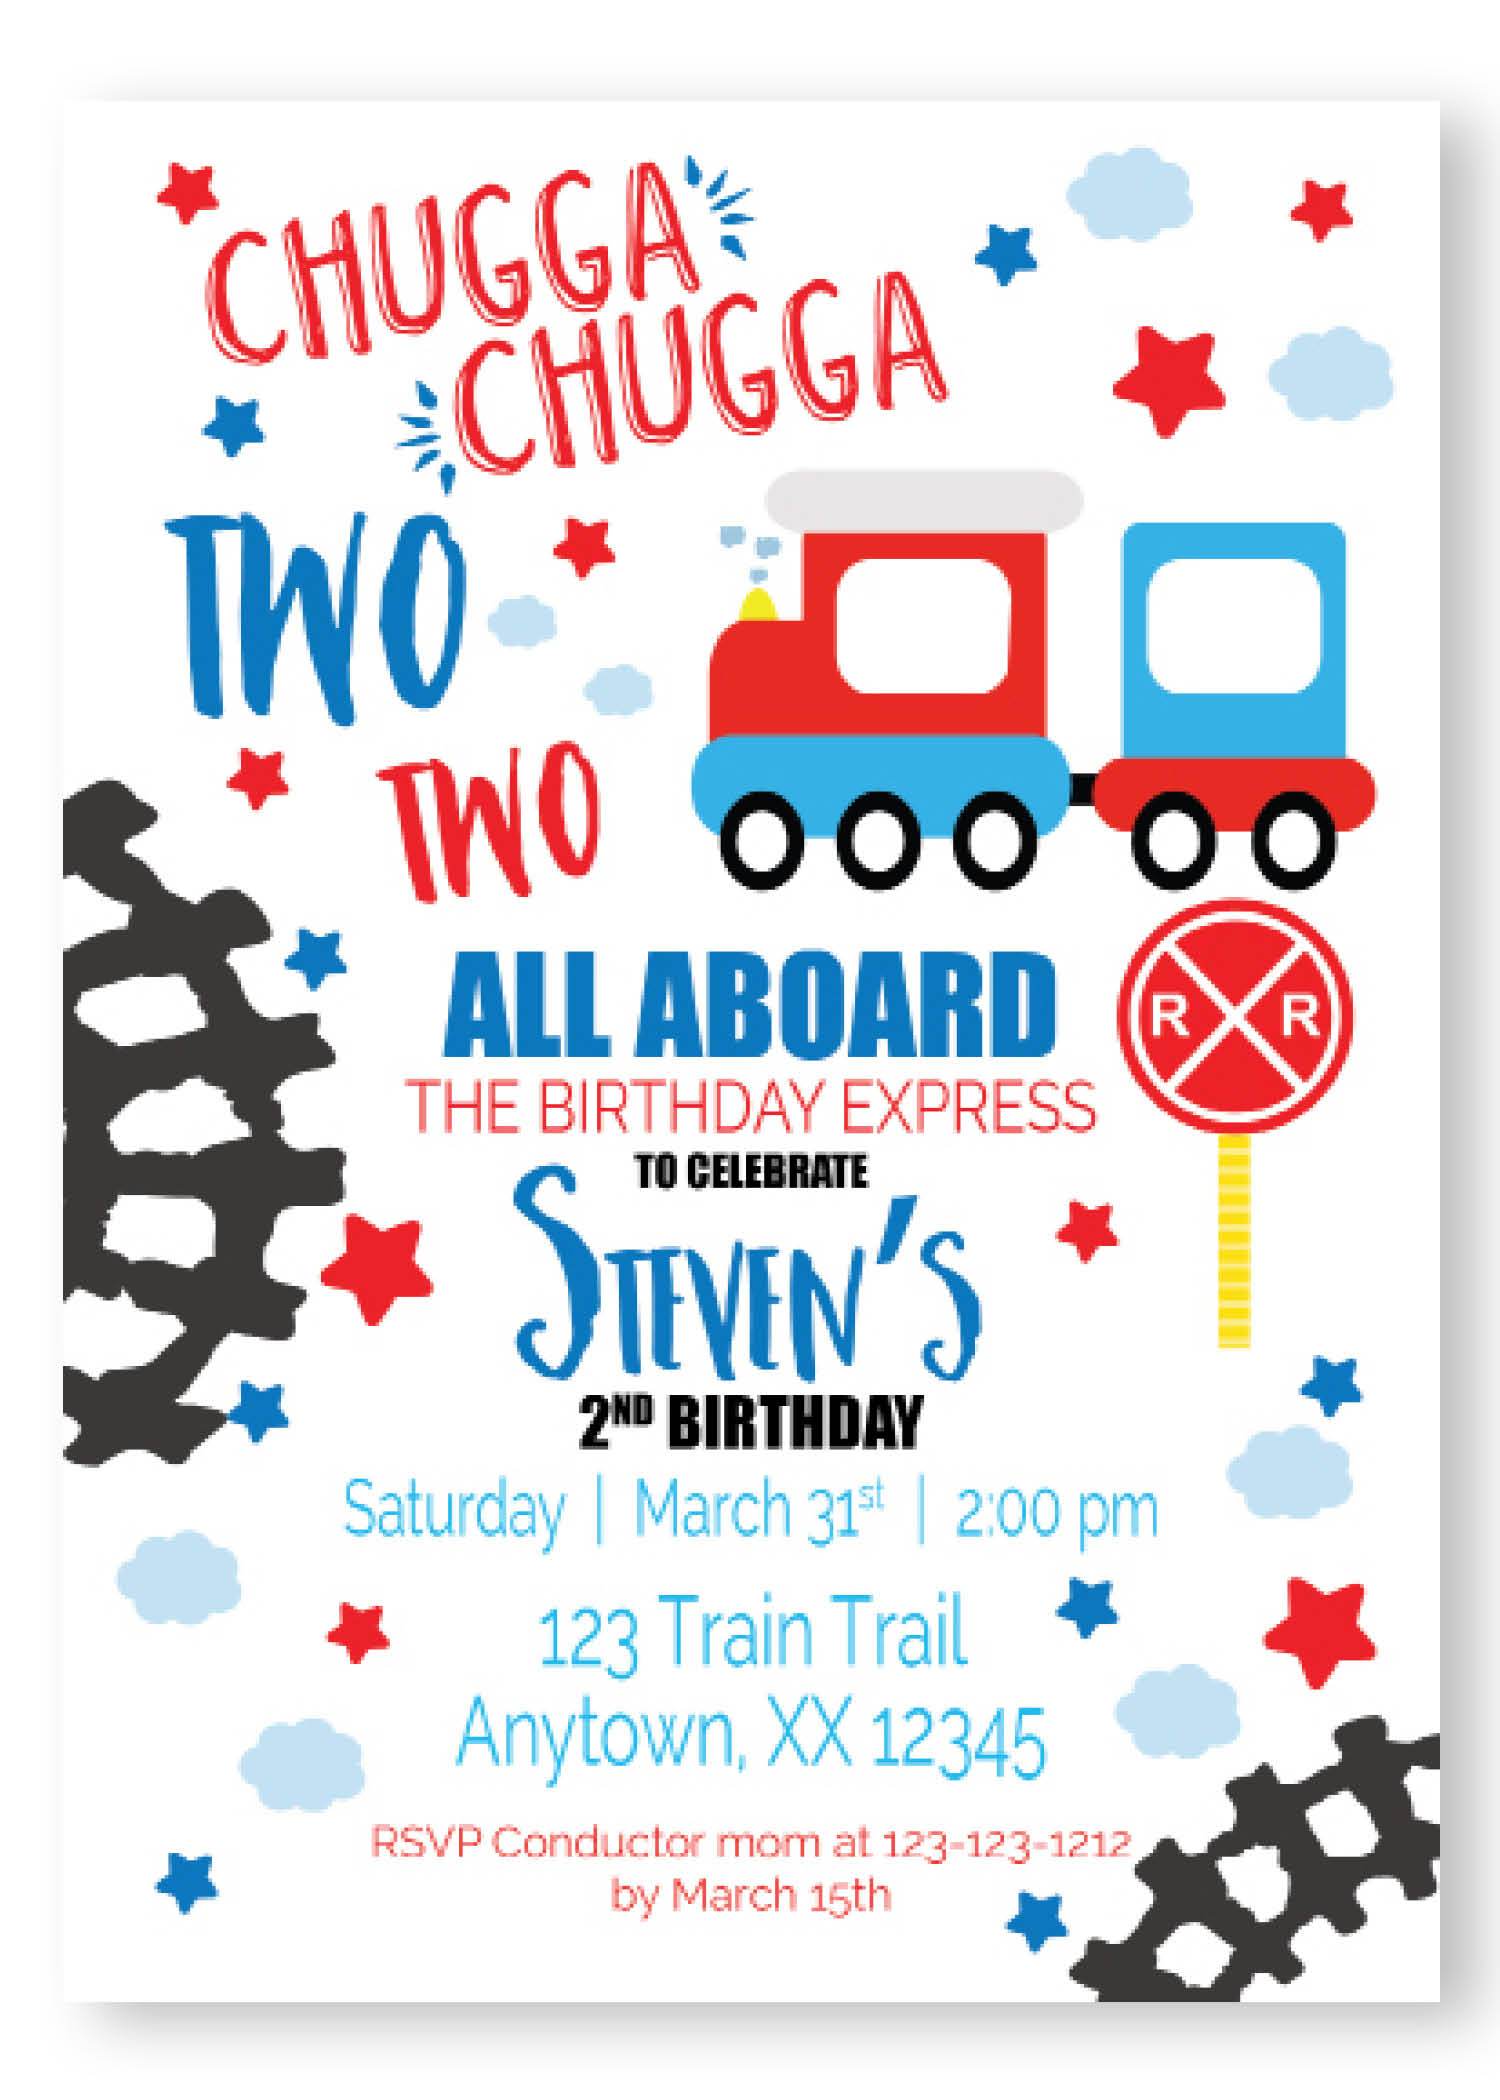 Chugga two two birthday invitations, chugga chugga birthday, personalized